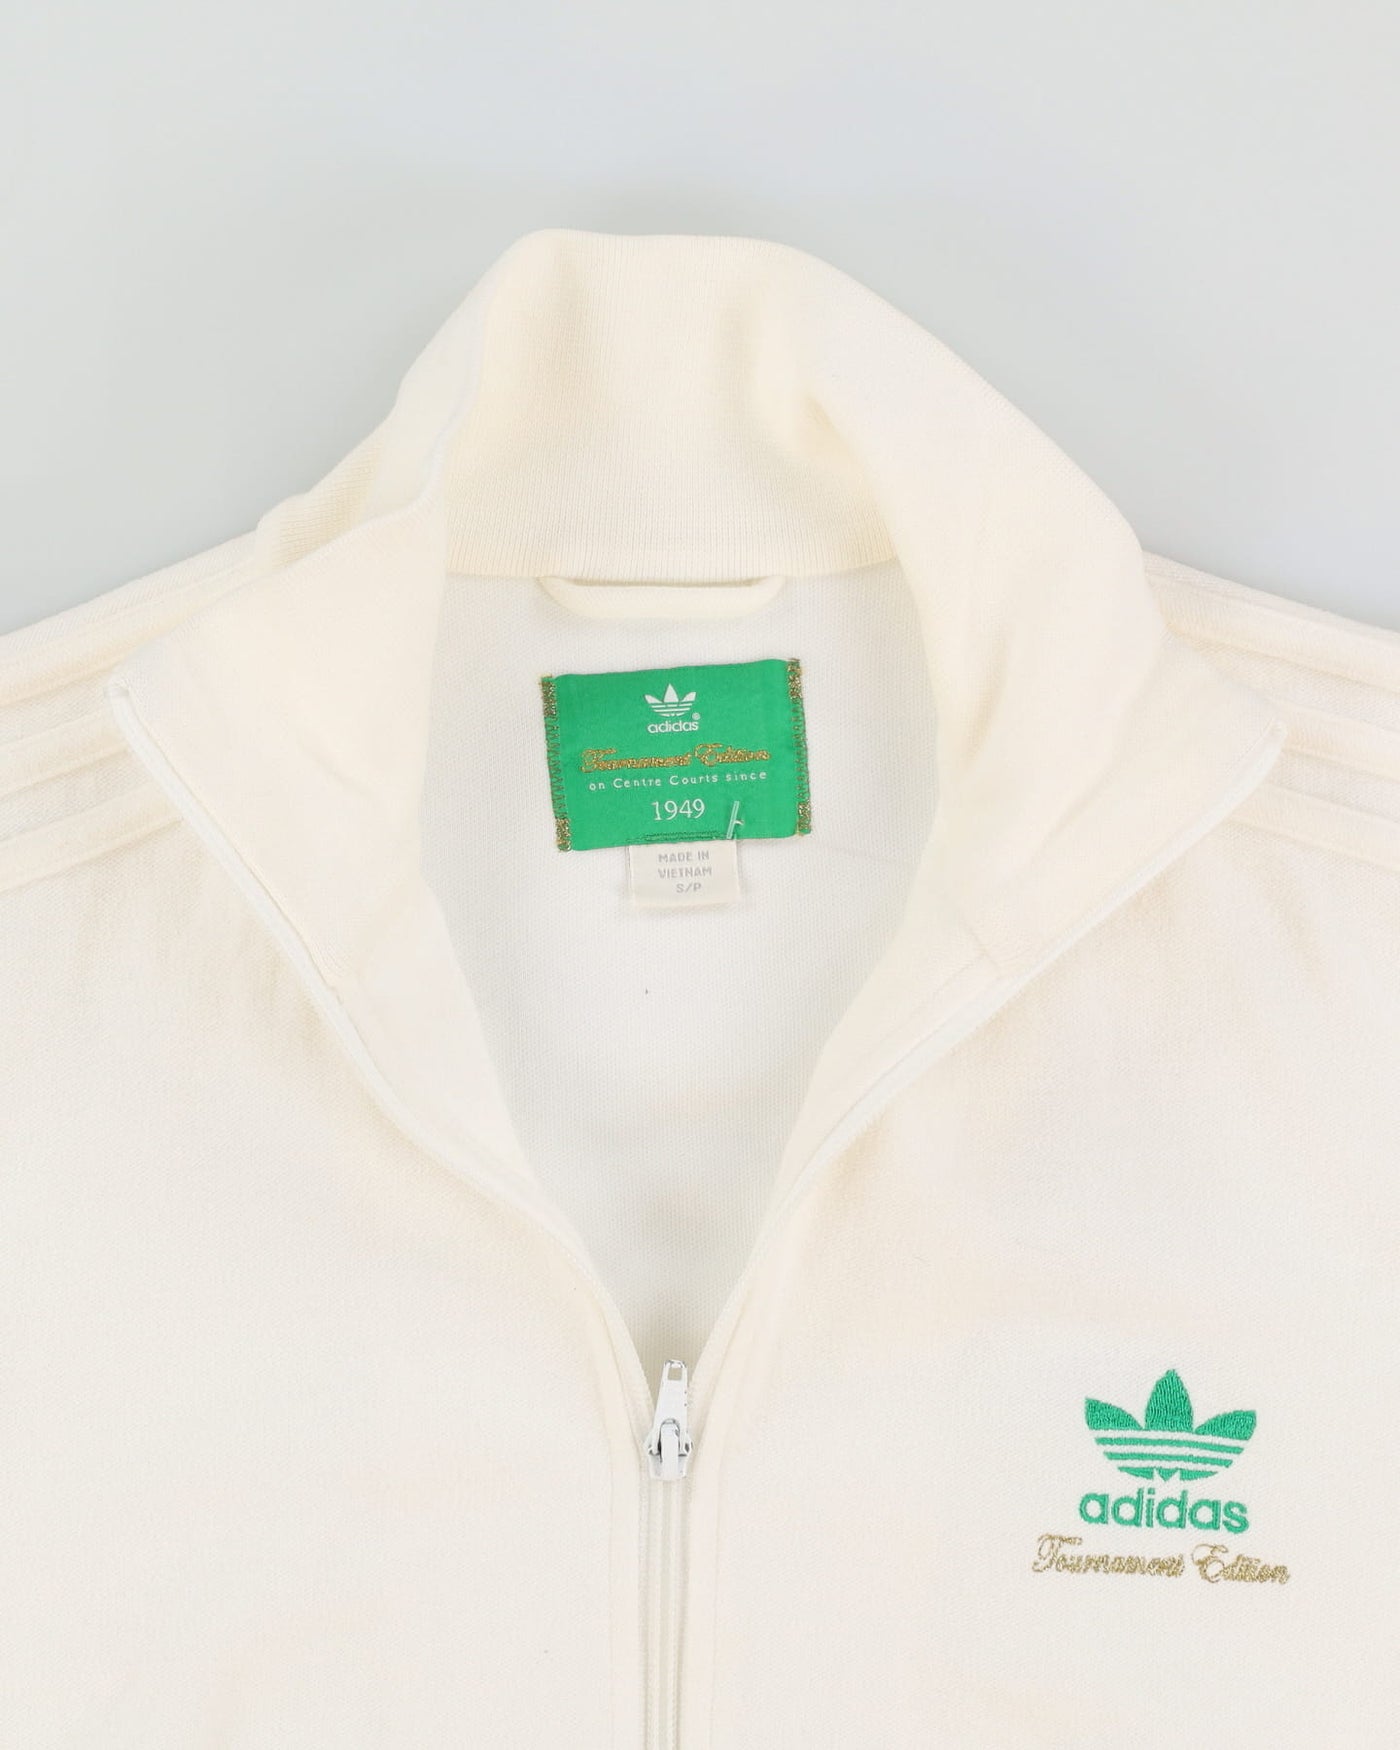 00s Adidas Tournament Edition White Full-Zip Track Jacket - S – Rokit